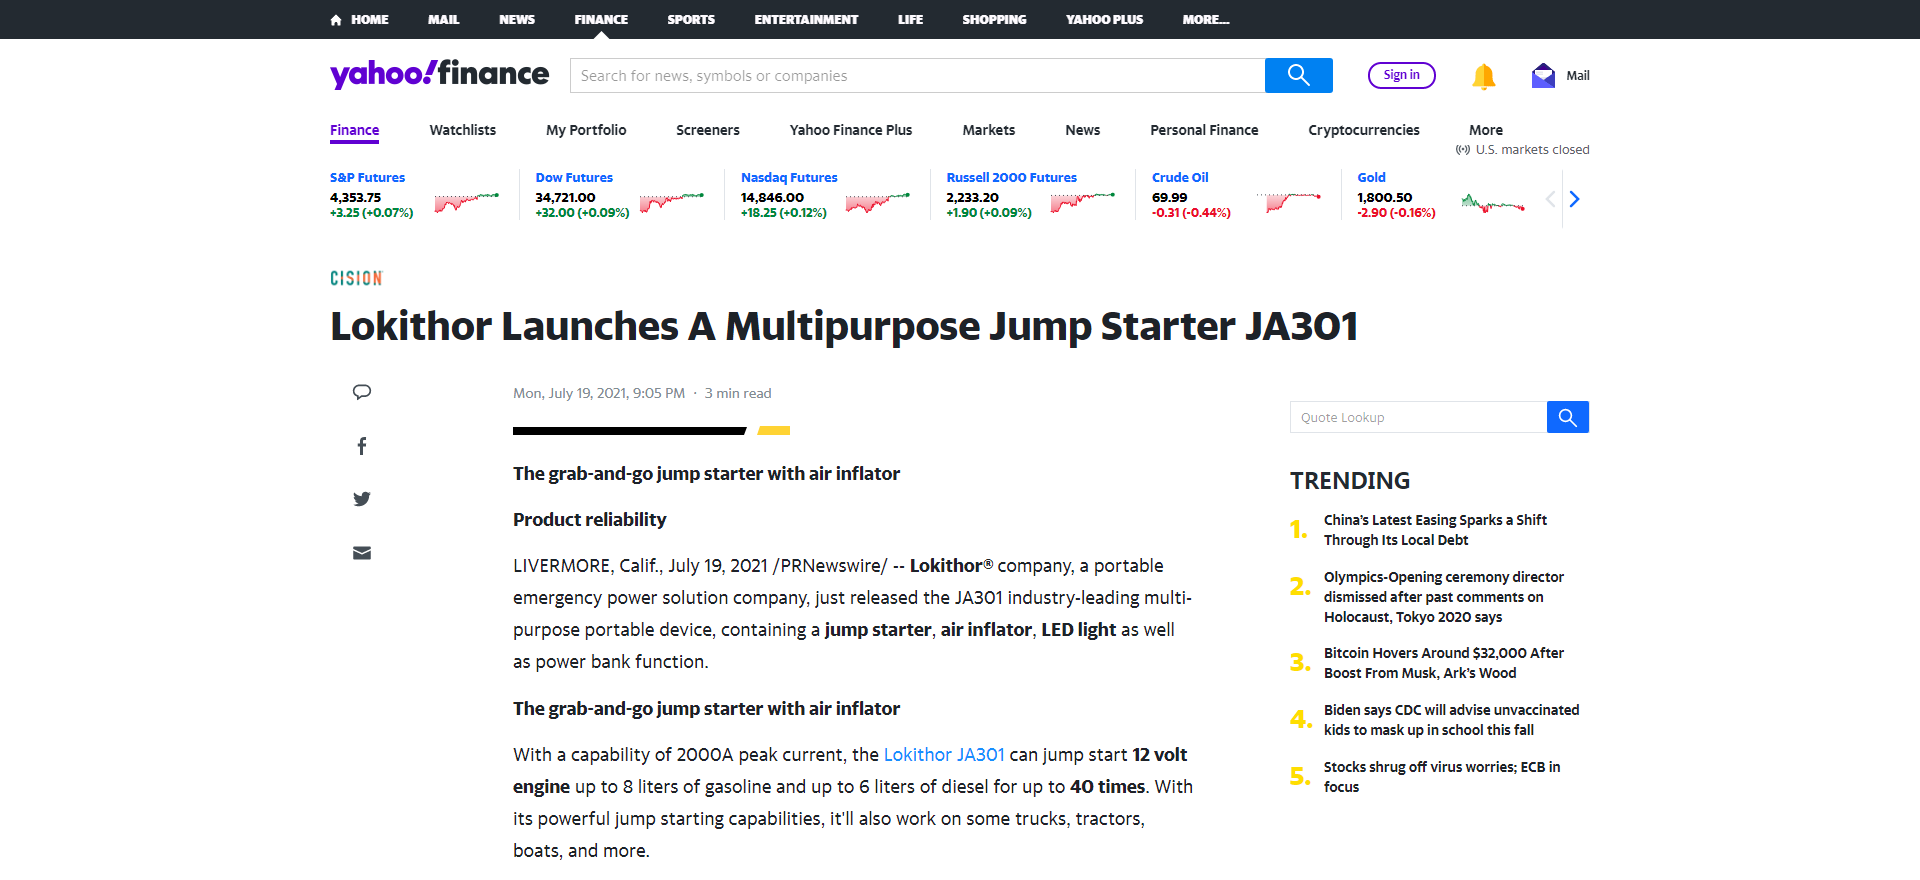 Lokithor Launches A Multipurpose Jump Starter JA301 - finance.yahoo.com